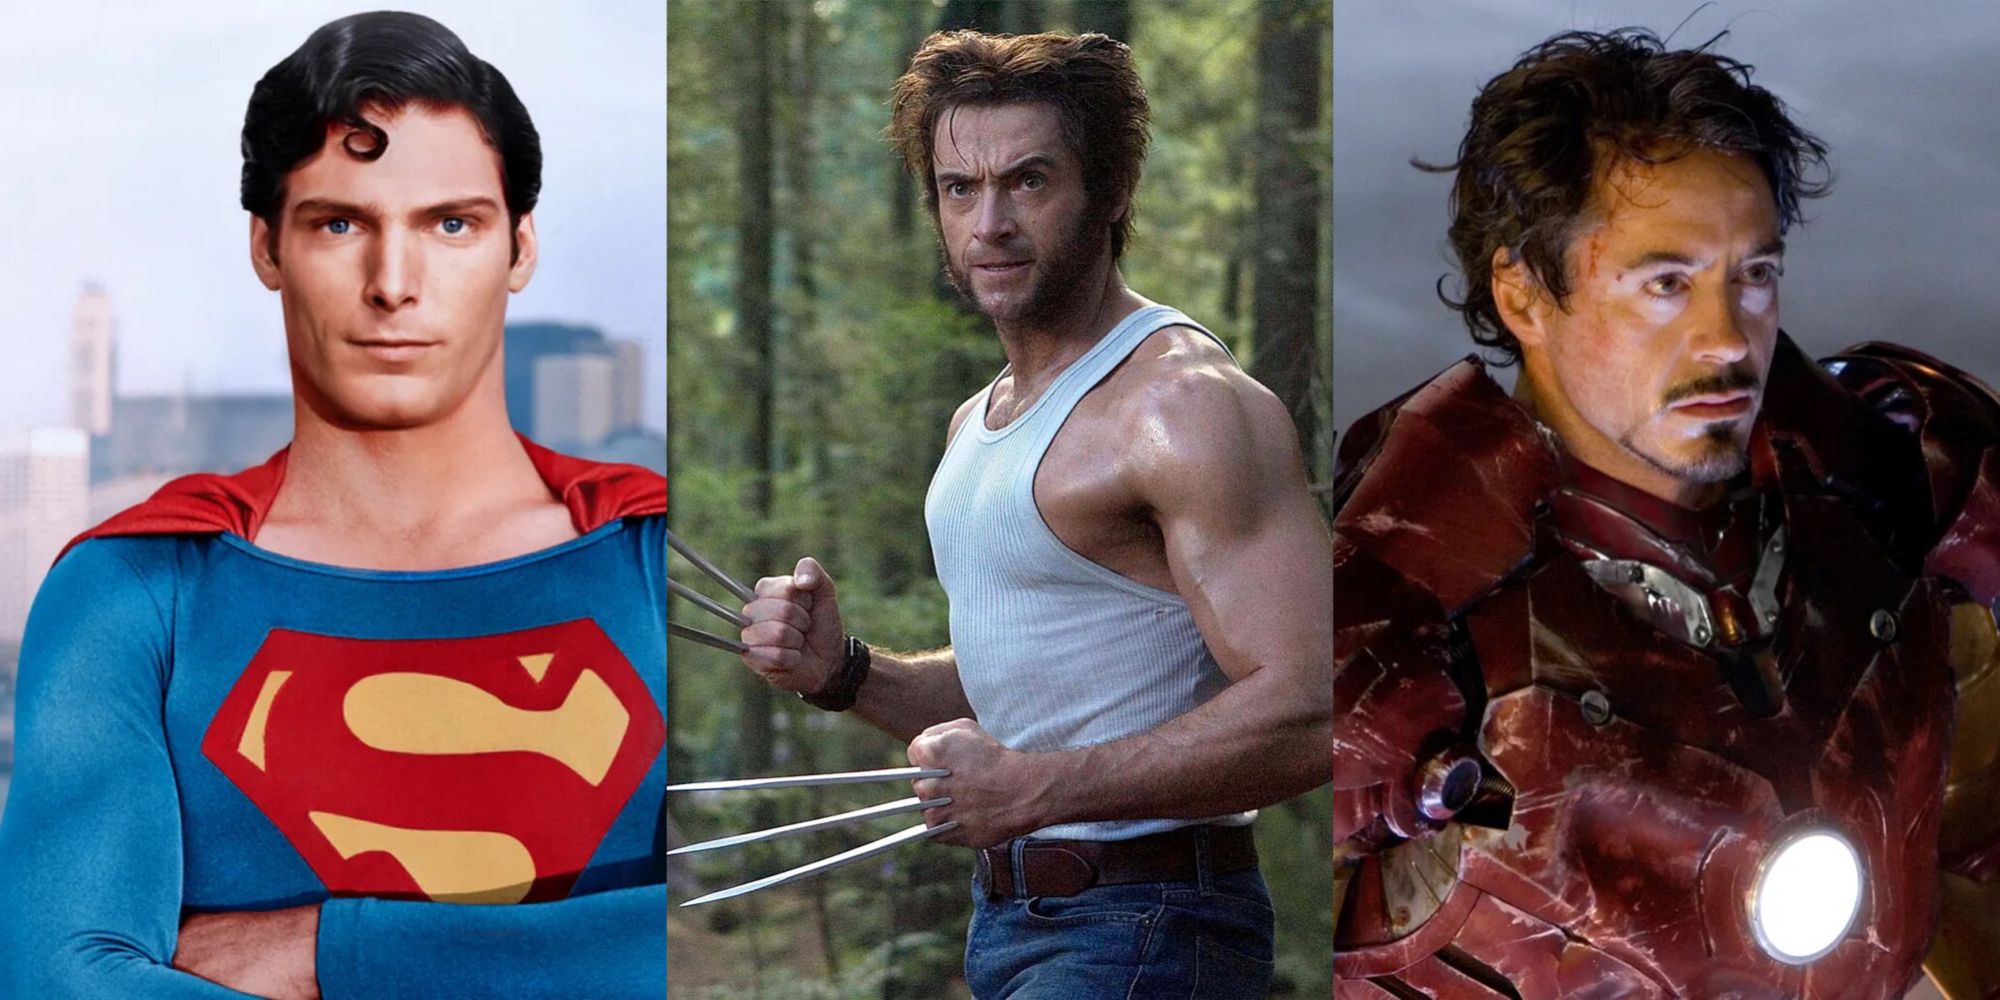 Christopher Reeve as Superman, Hugh Jackman as Wolverine, and Robert Downey Jr. as Iron Man